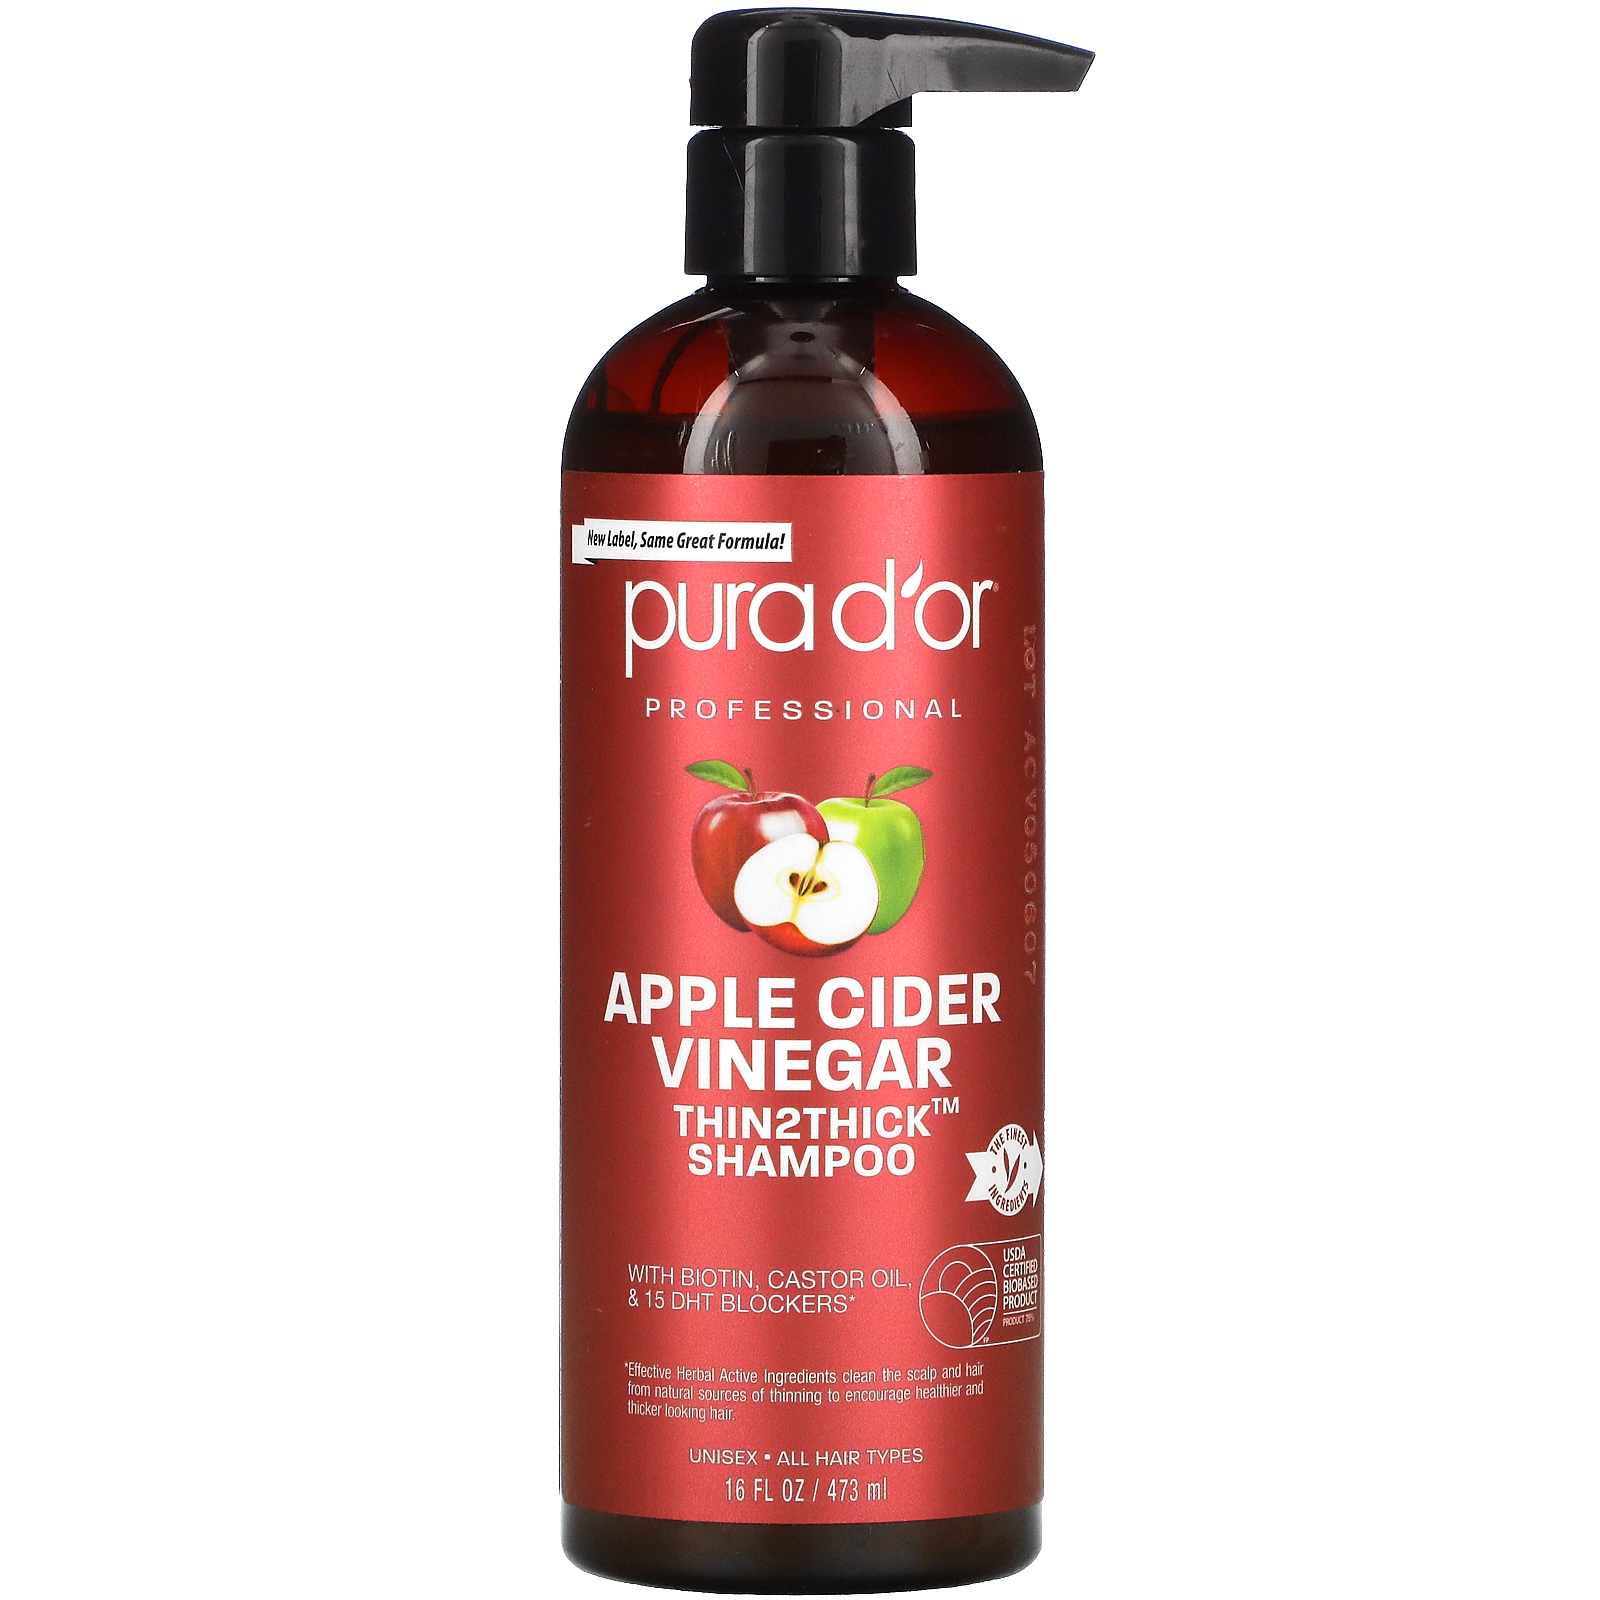 Pura d'or Apple Cider Vinegar Thin2Thick Shampoo, thinning hair treatments Target